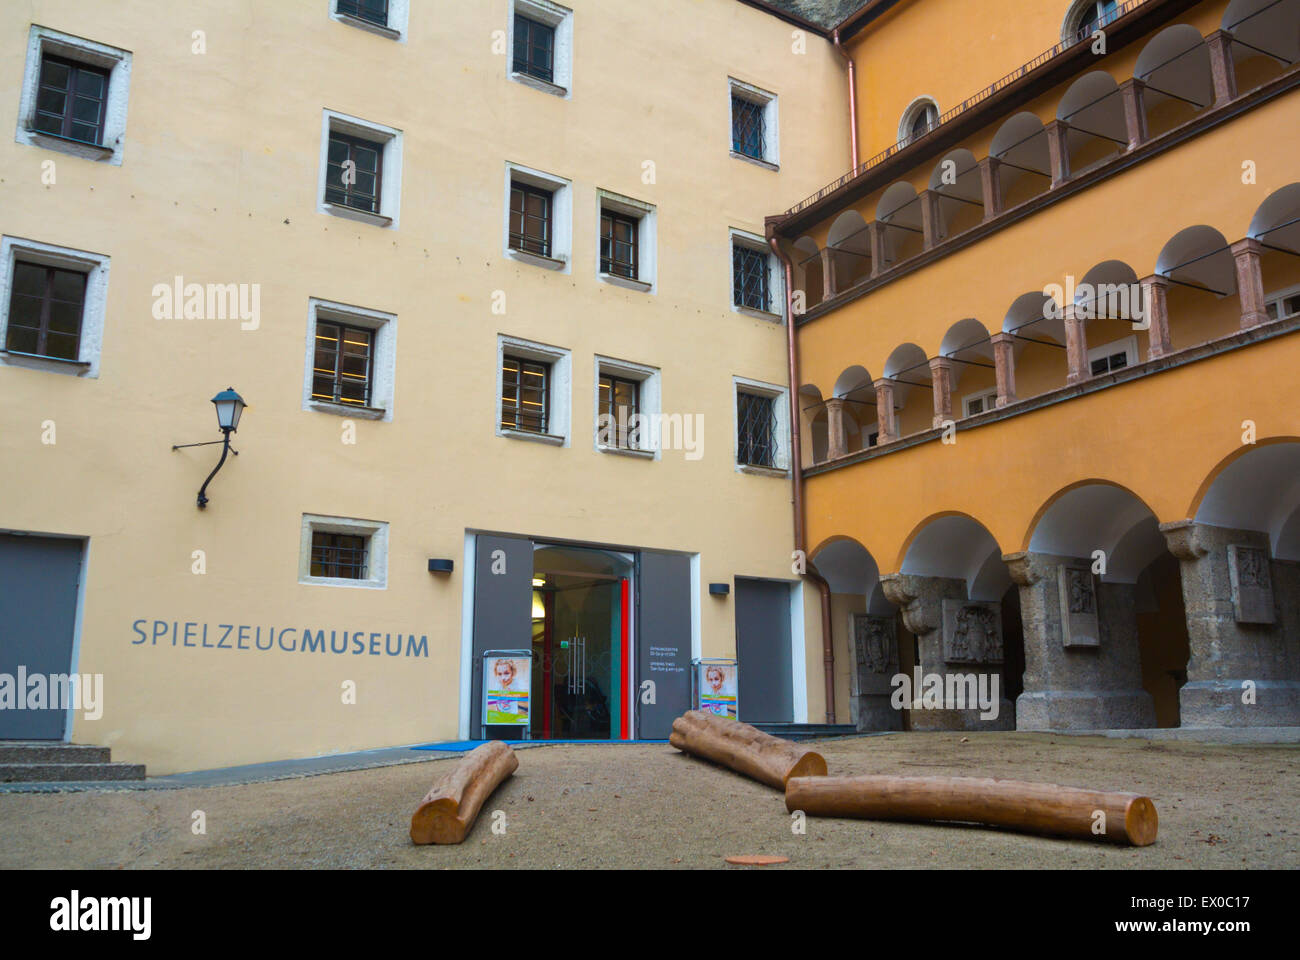 Salzburger Spielzeugmuseum, Spielzeugmuseum, Altstadt, Altstadt, Salzburg, Österreich Stockfoto